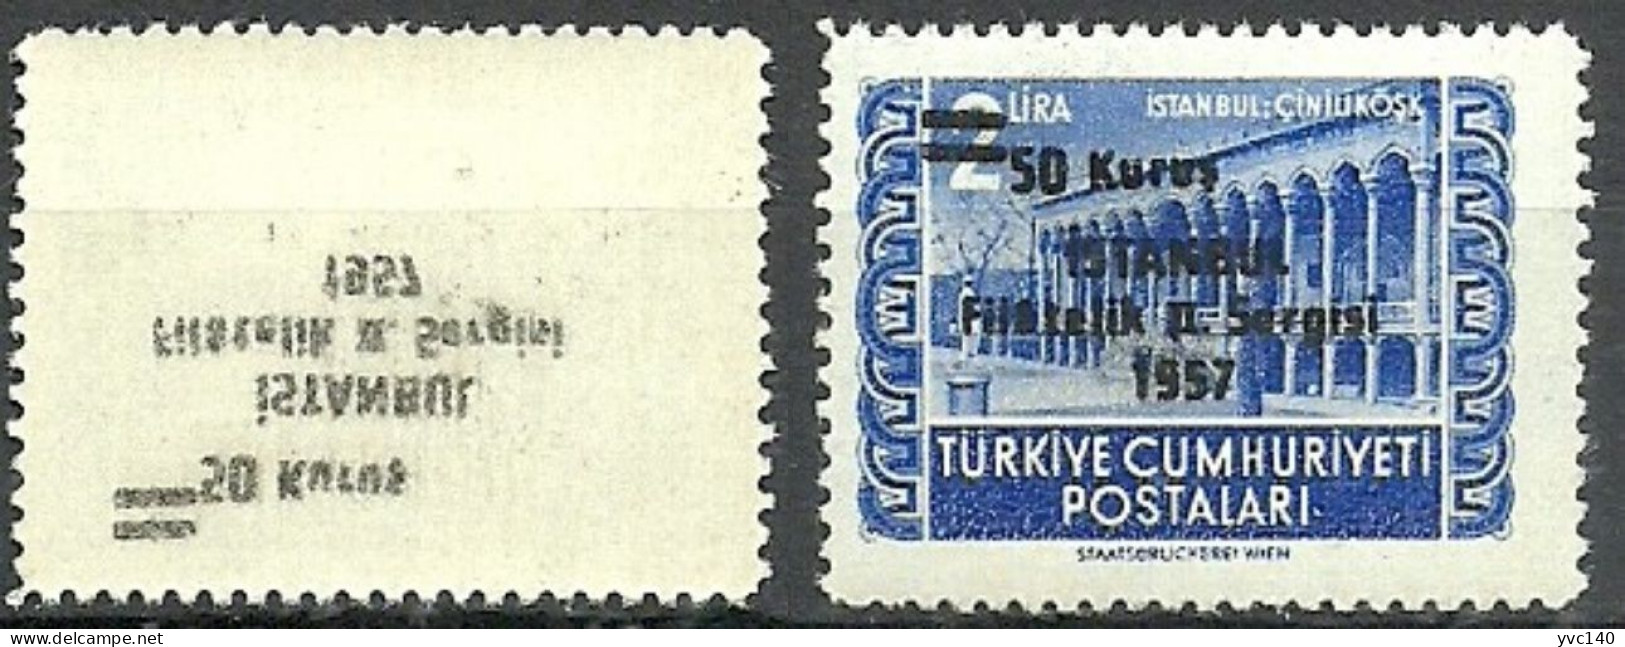 Turkey; 1957 Surcharged Commemorative Stamp For Istanbul Philately Exhibition ERROR "Abklatsch Surcharge" - Ongebruikt